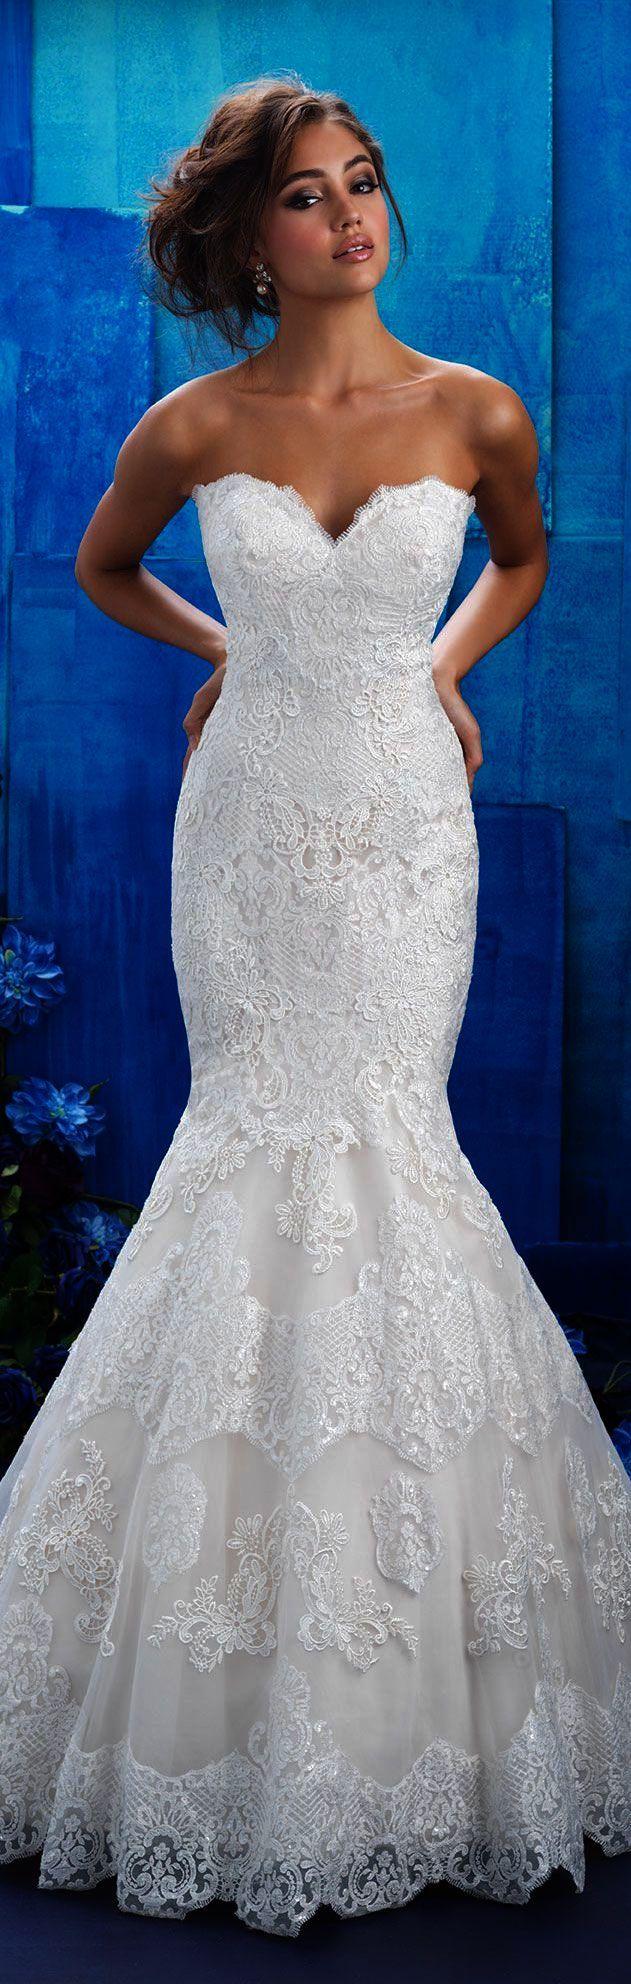 زفاف - Terrific... Lace Wedding Dress With Open Back And Cap Sleeves #get 